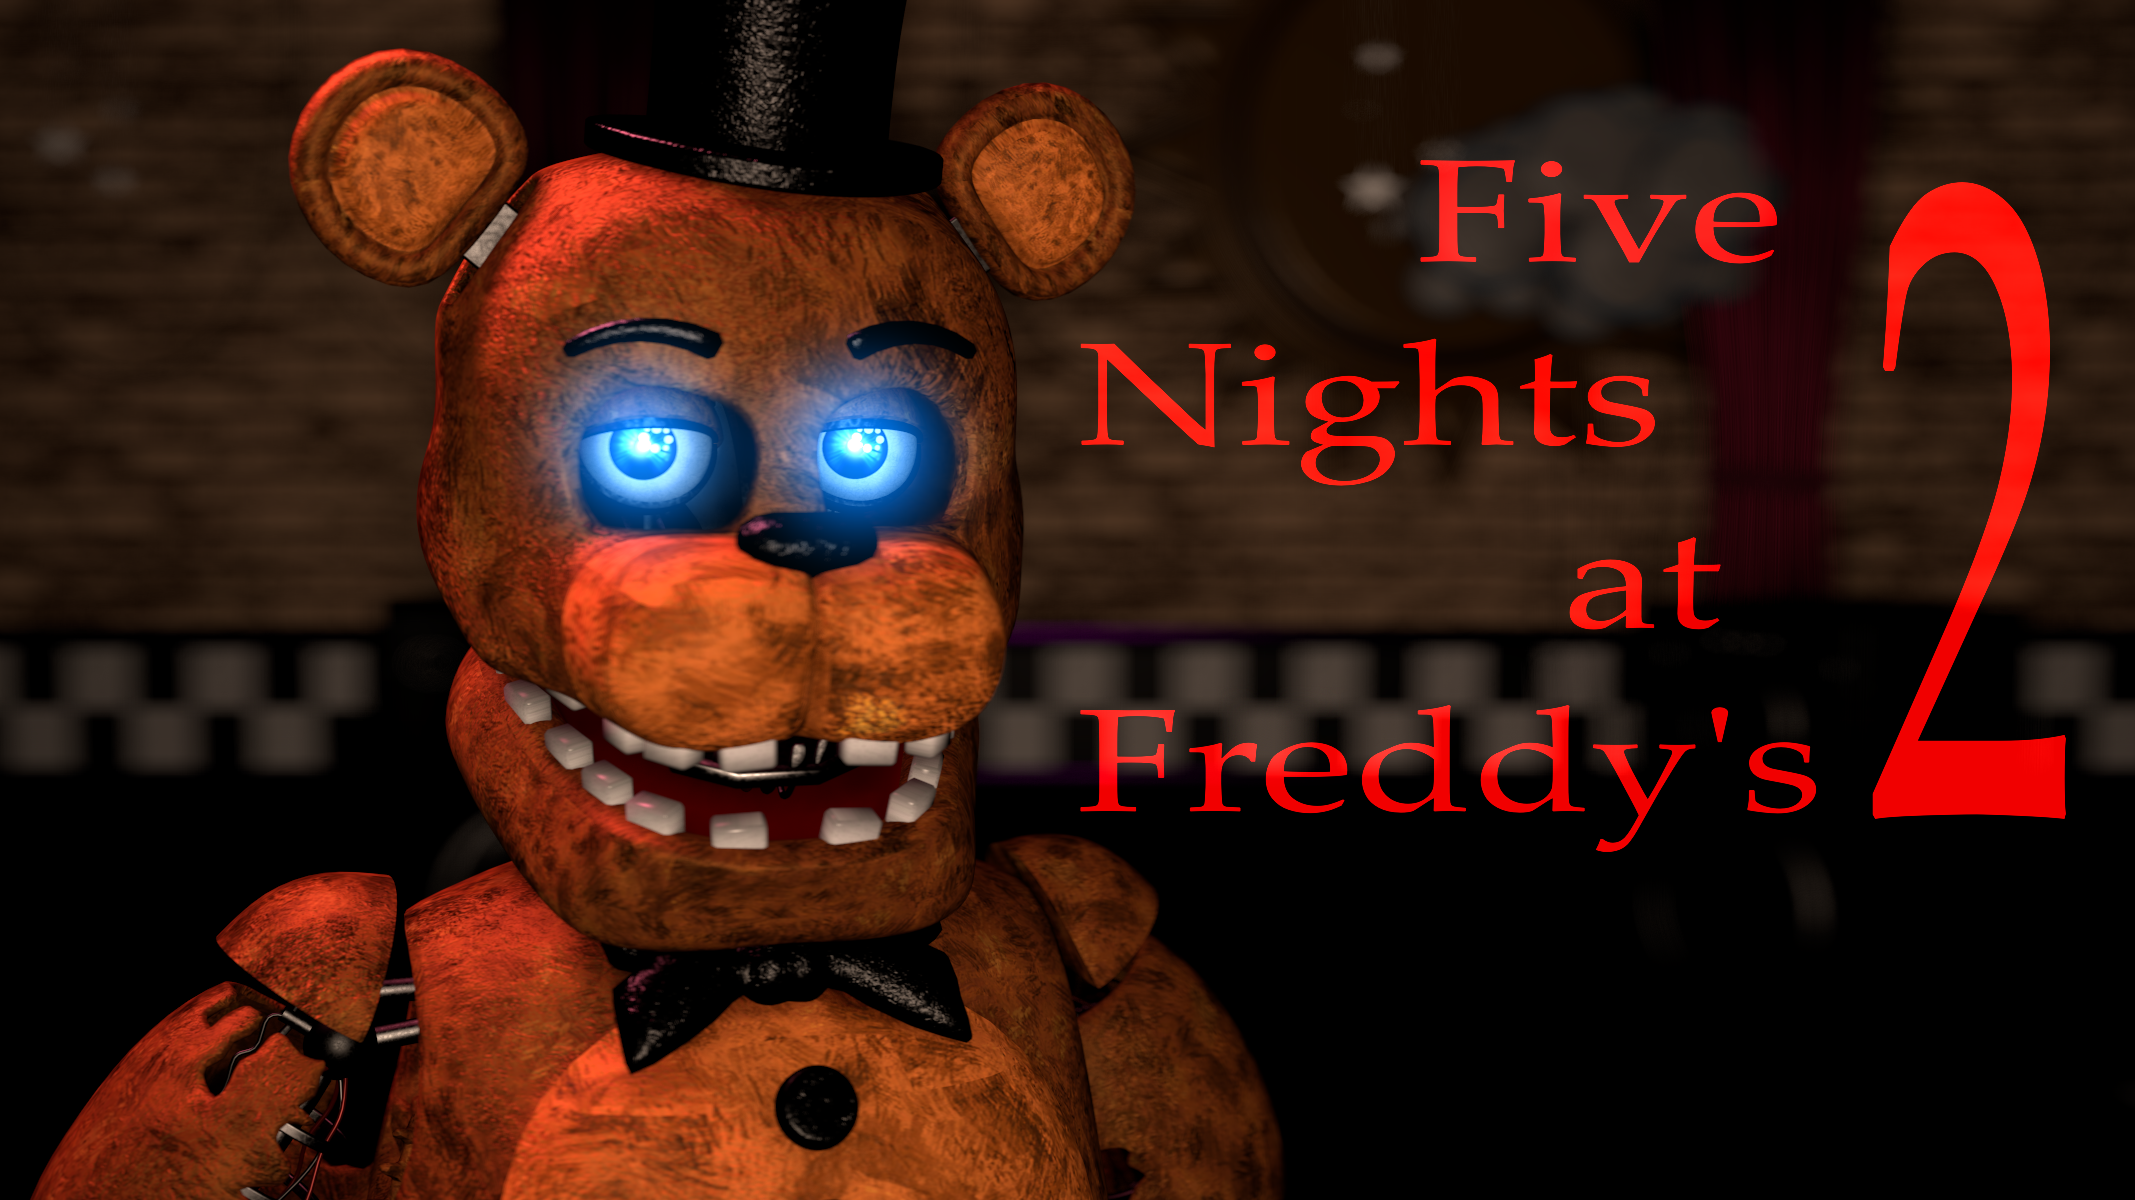 Five Nights at Freddy's 2 by freddygamer24 on DeviantArt